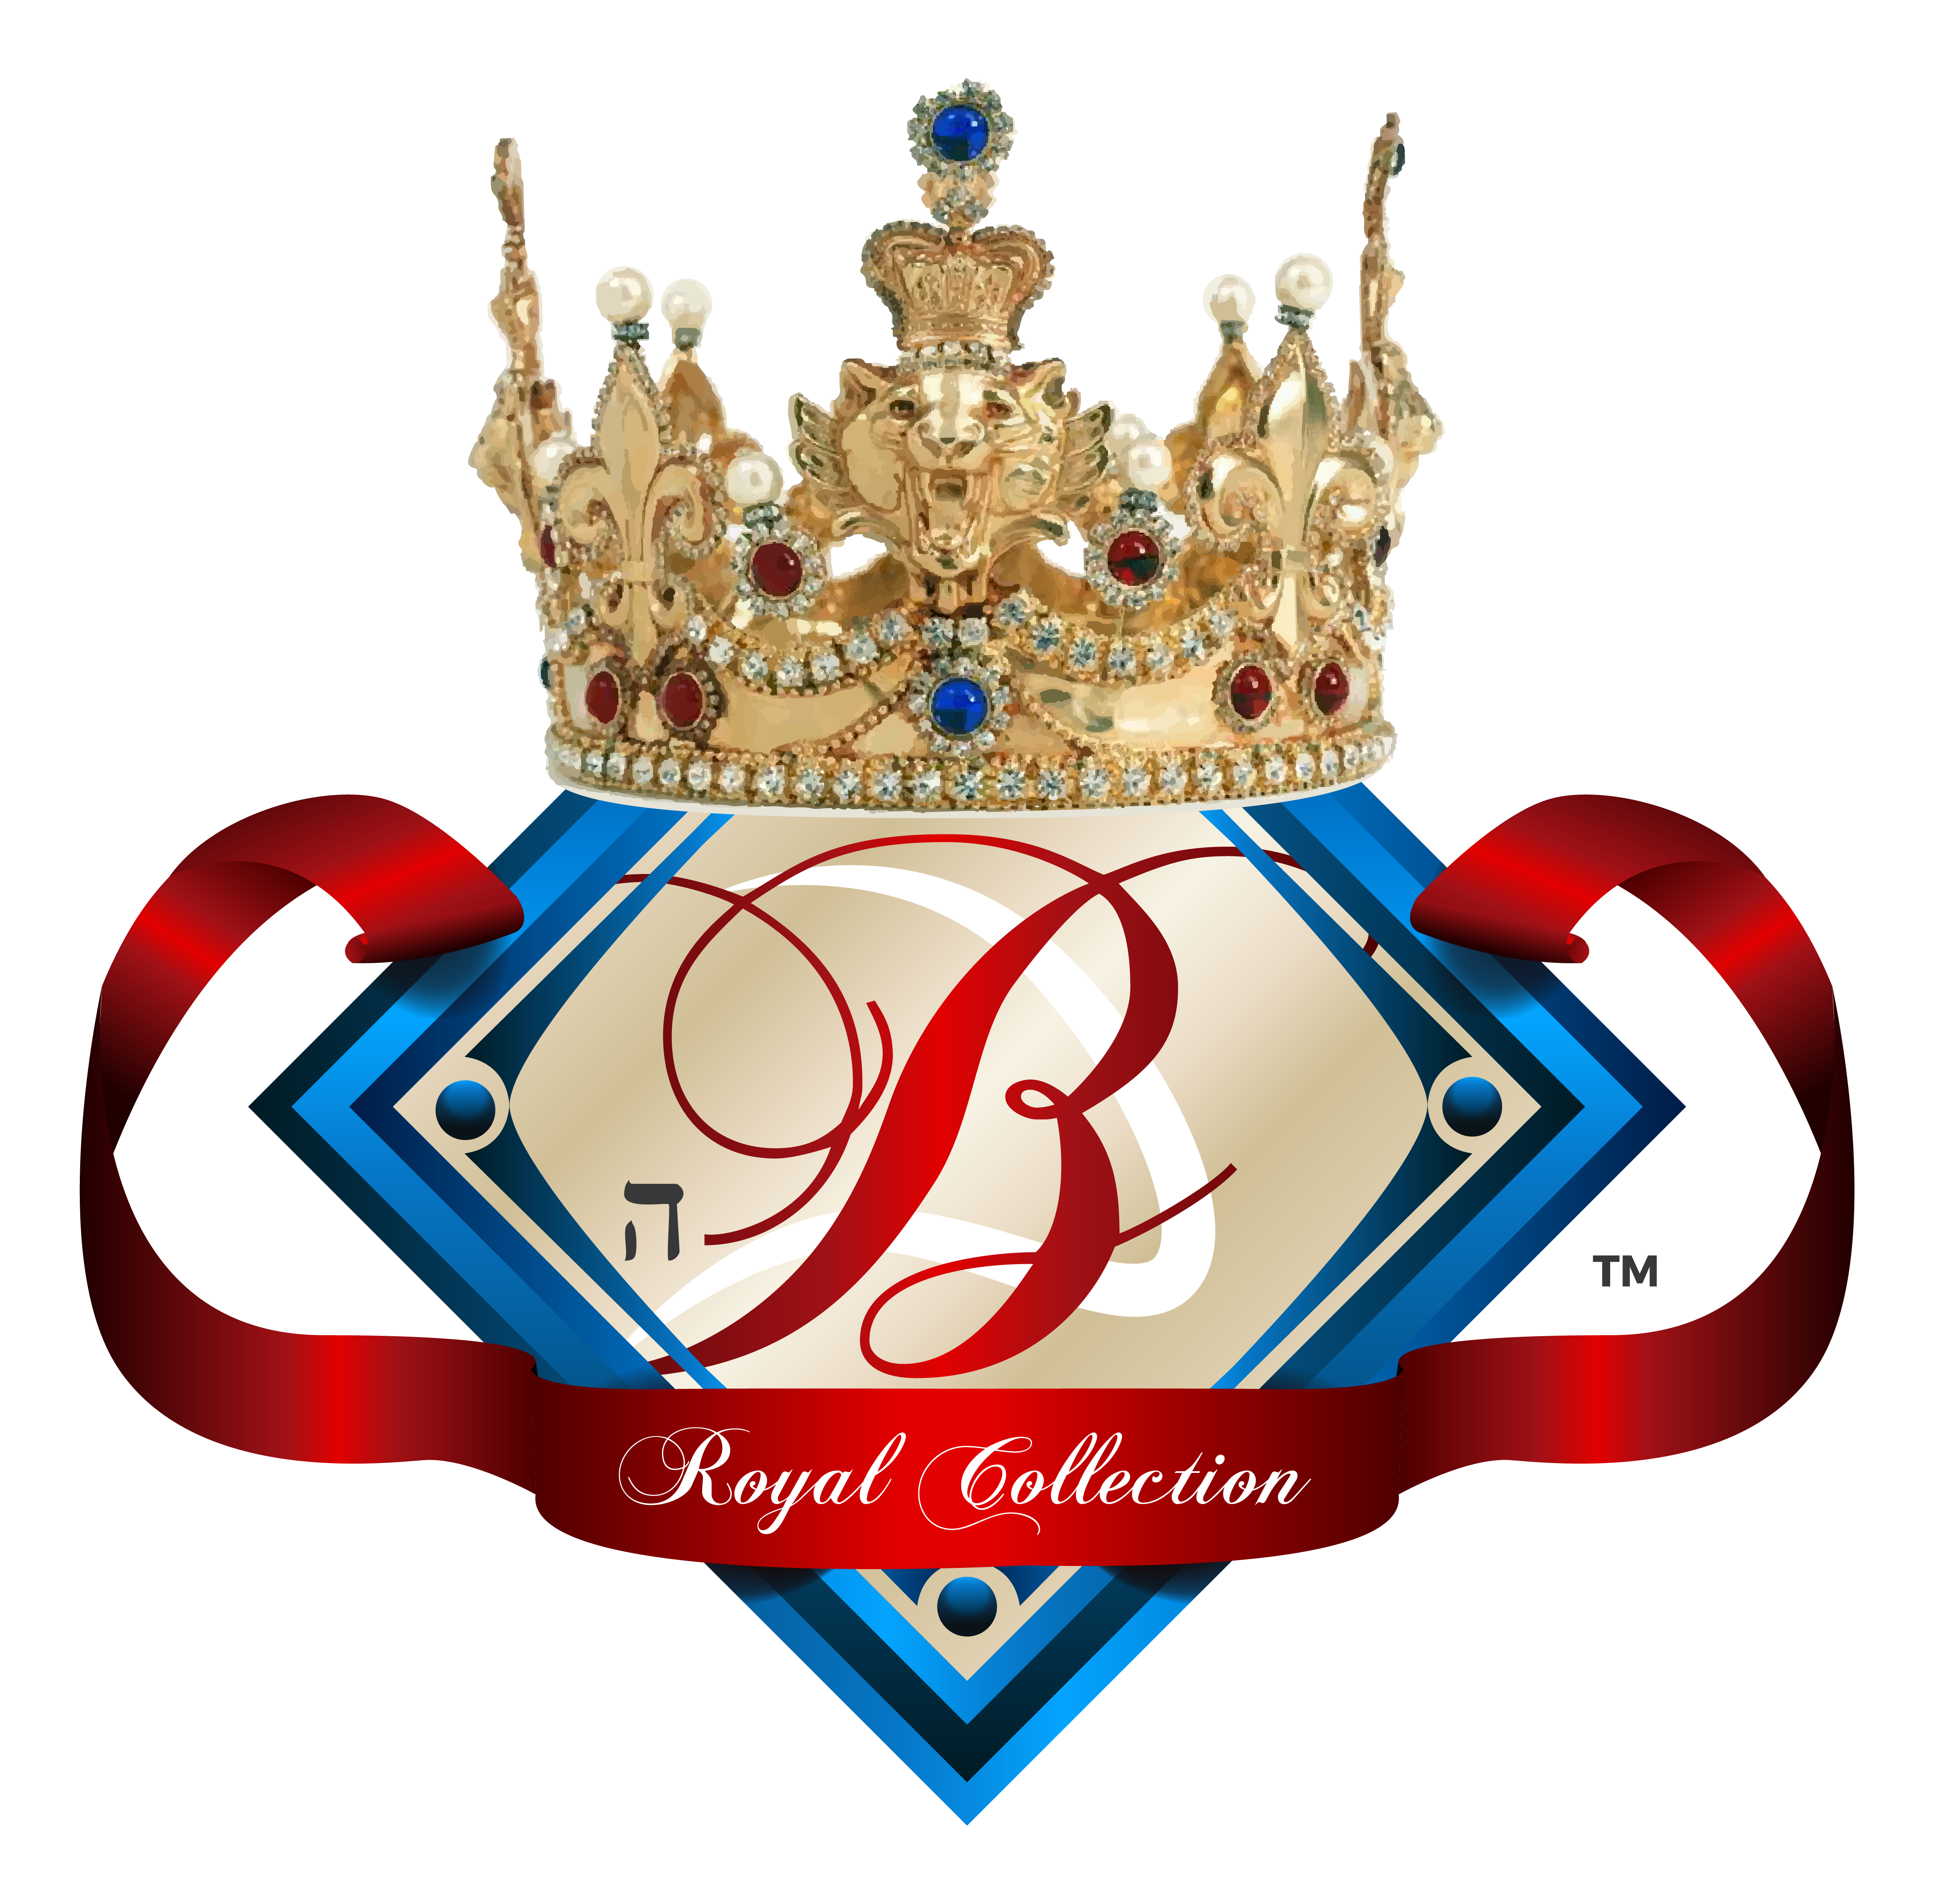 Royal Collection Cigars